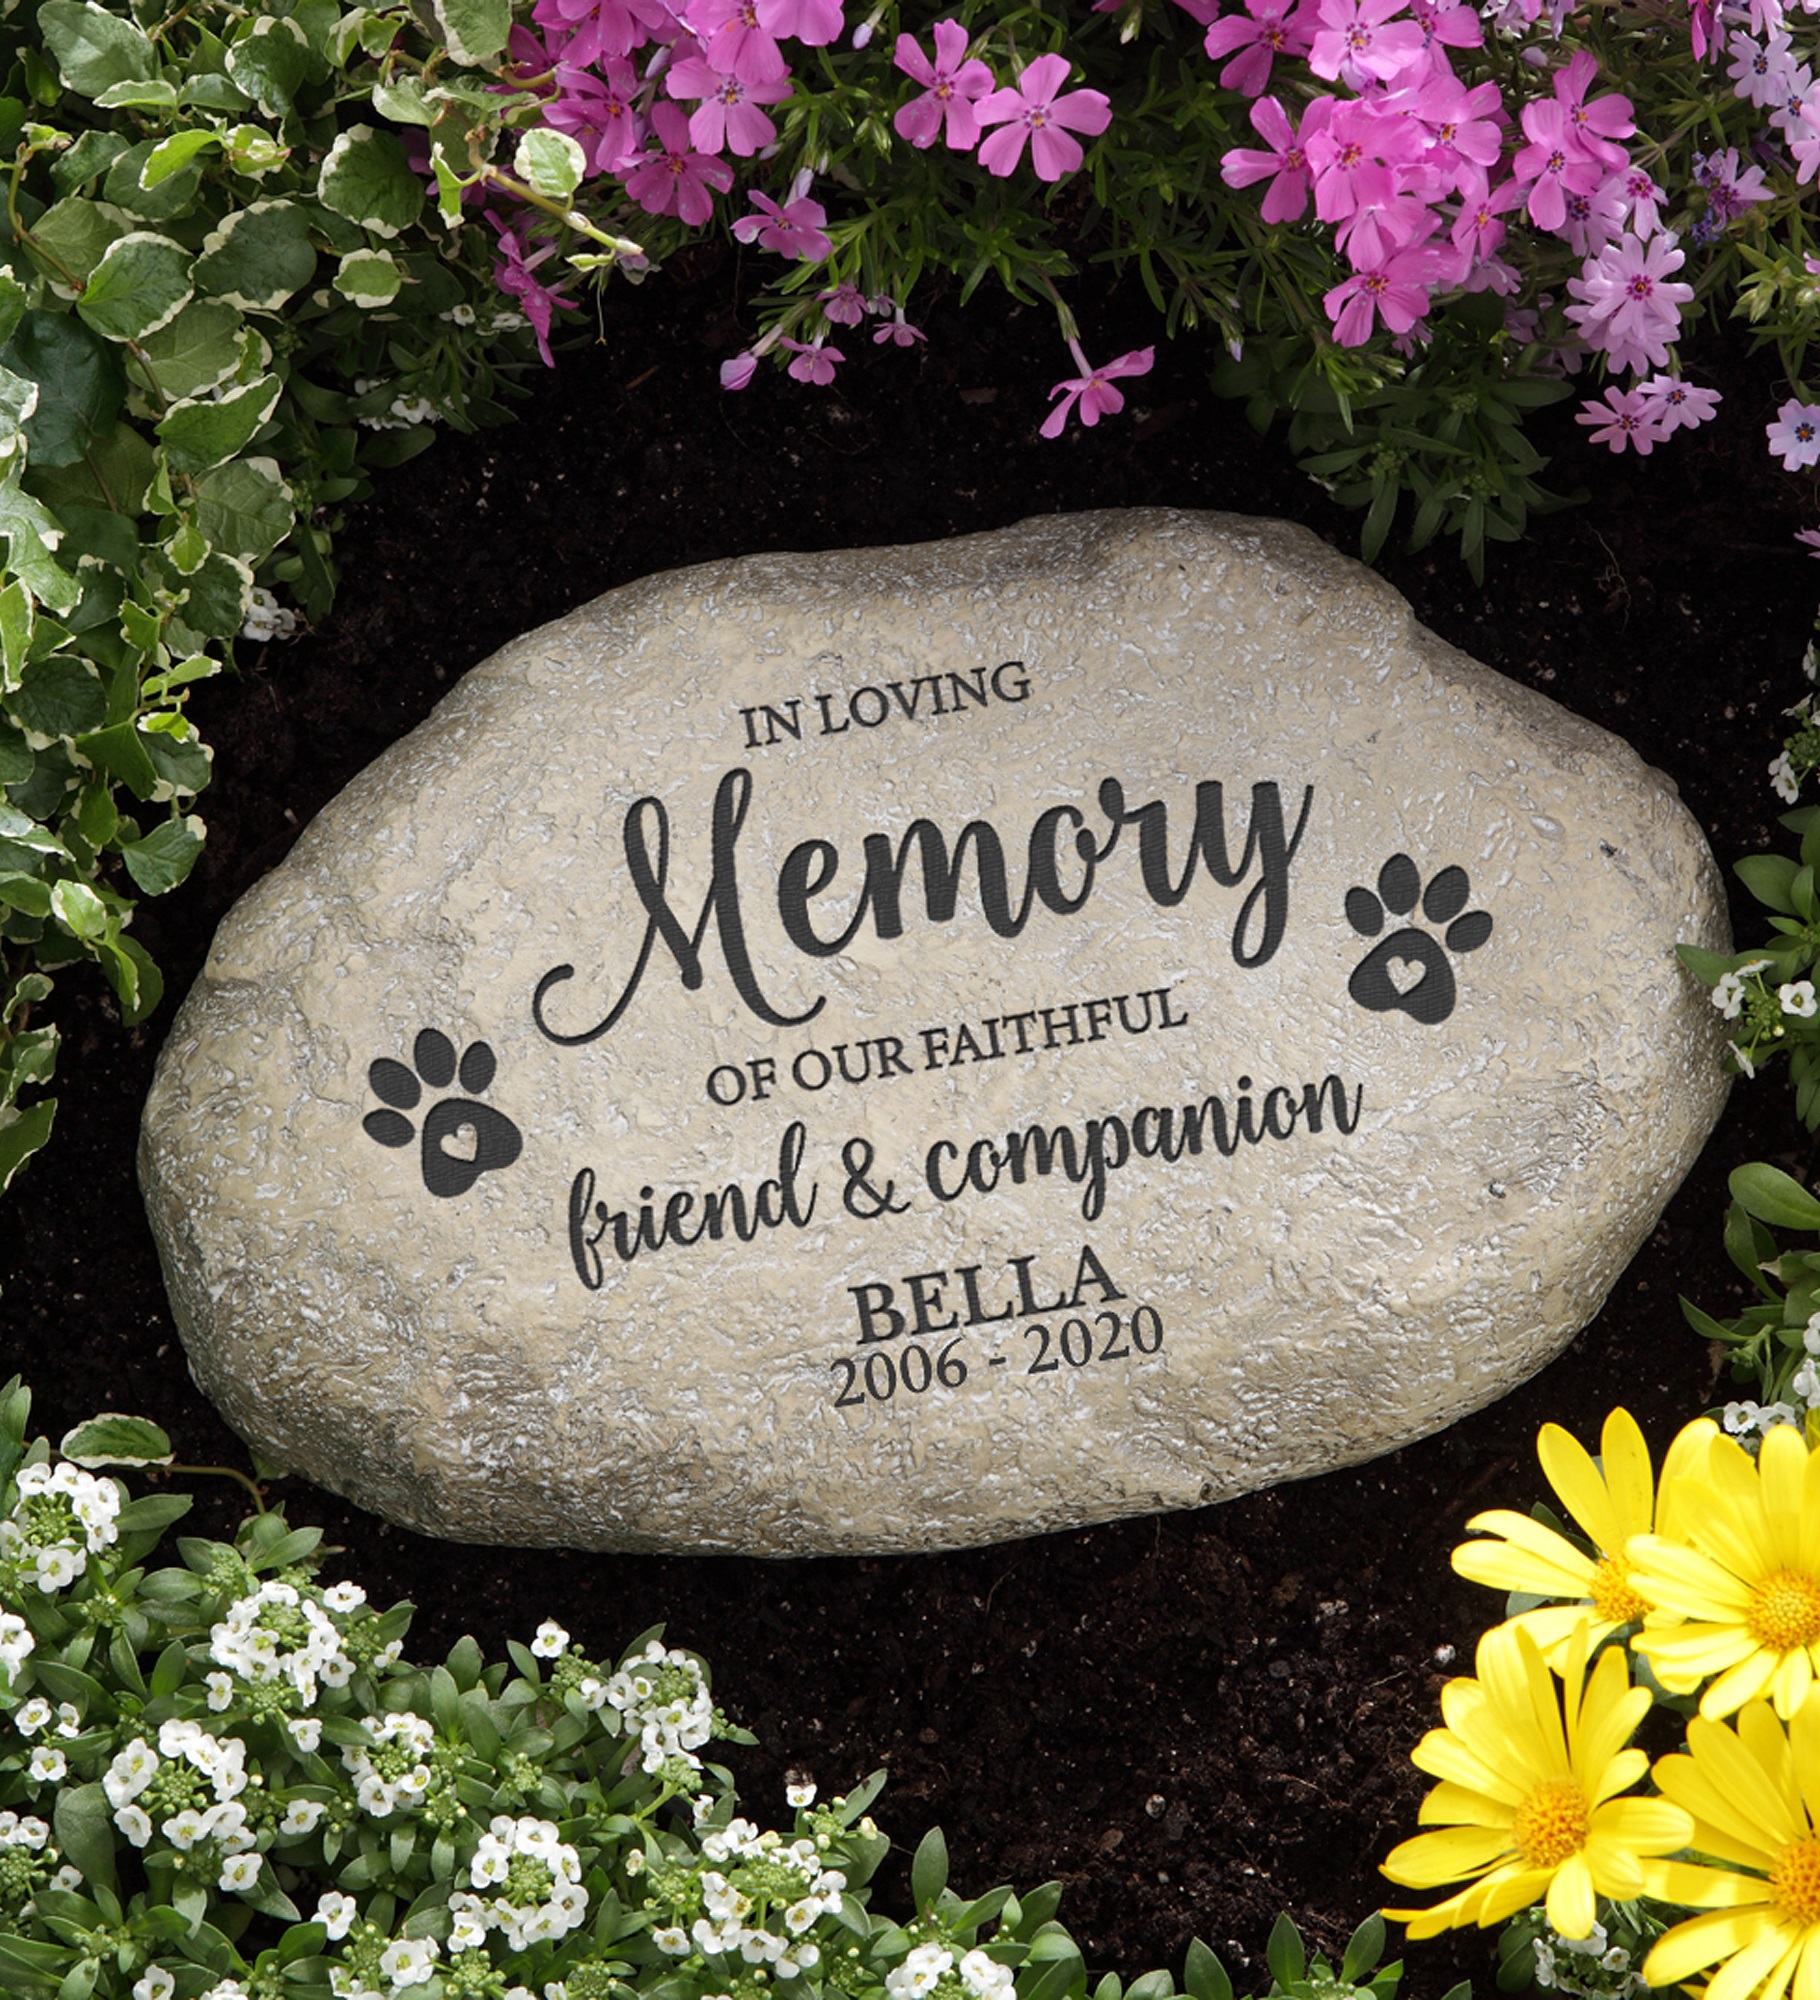 Rainbow Bridge Pet Memorial Personalized Standing Garden Stone